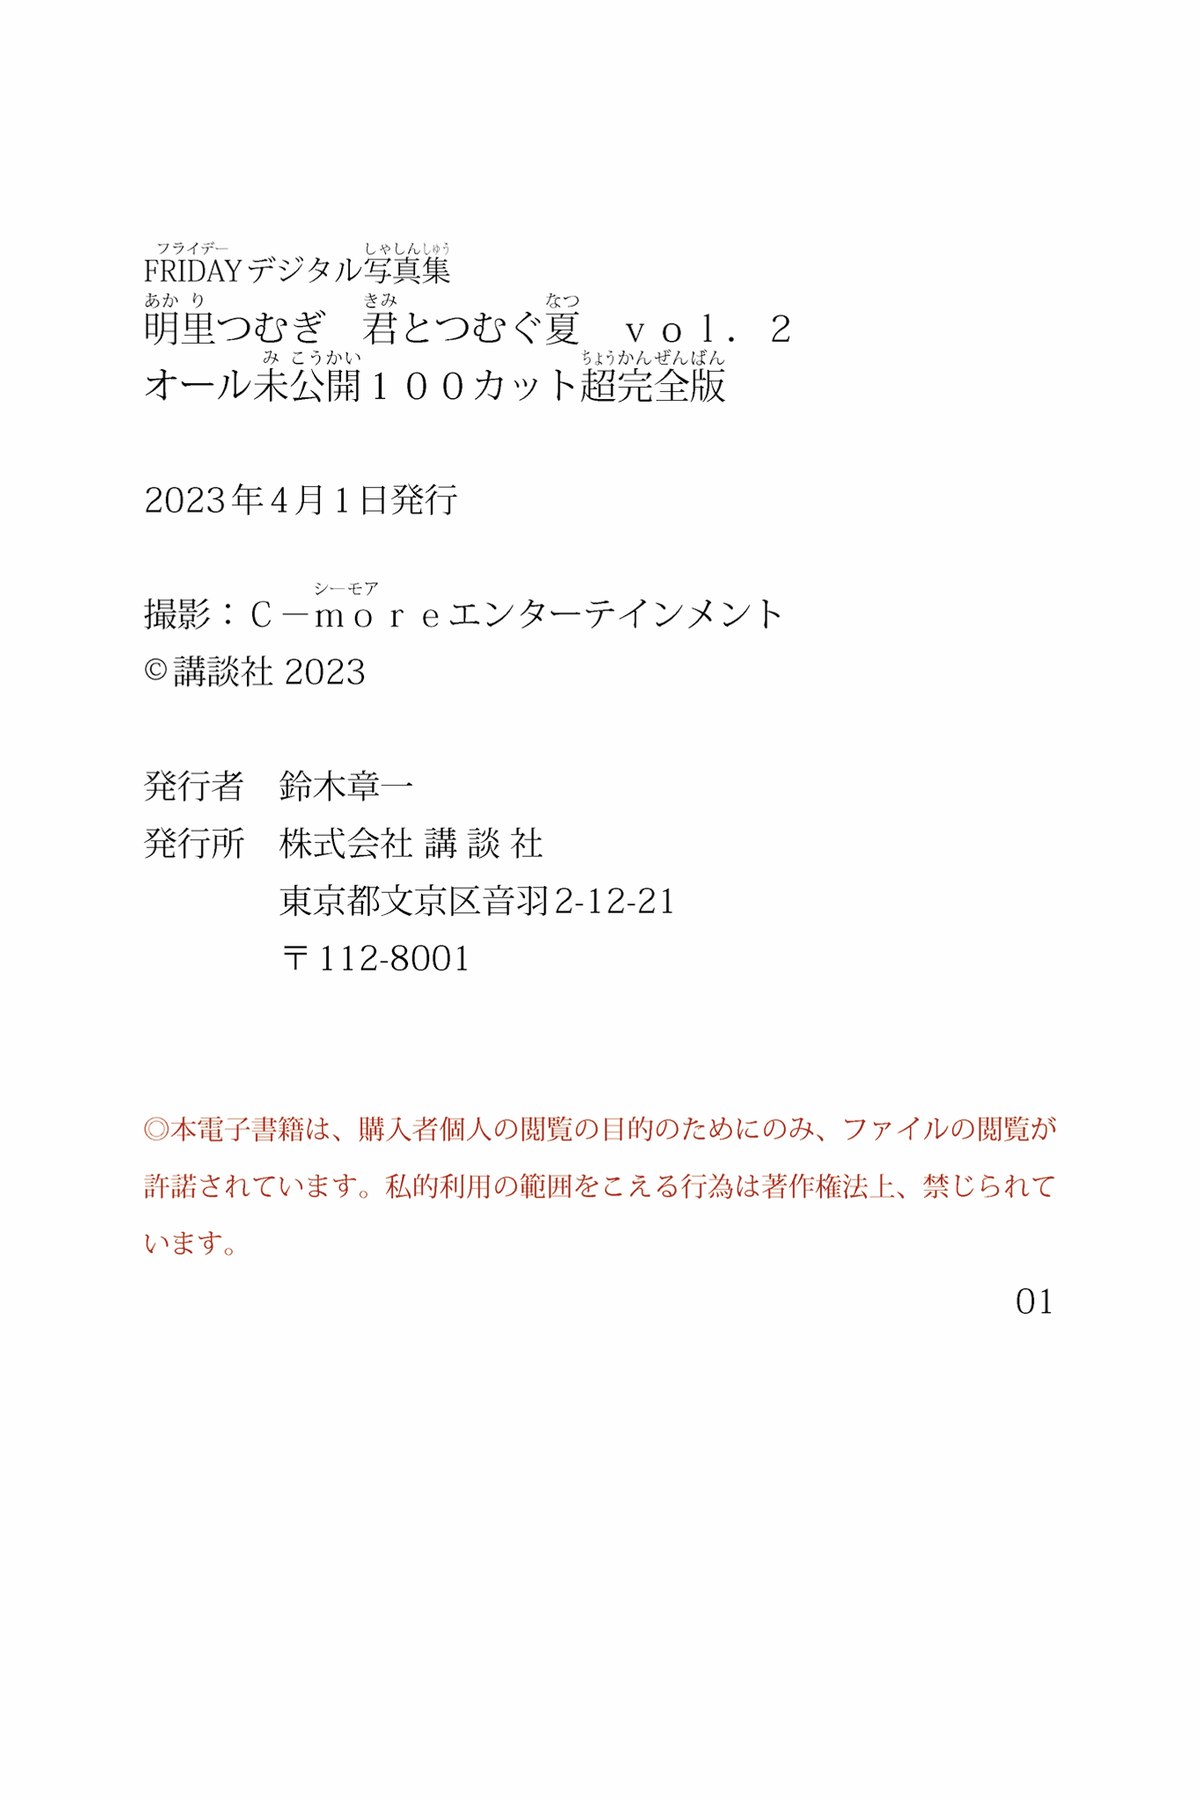 FRIDAYデジタル写真集 2023 03 24 Tsumugi Akari 明里つむぎ Kimi To Tsumugu Summer Vol 2 All Undisclosed 0003 8020030107.jpg